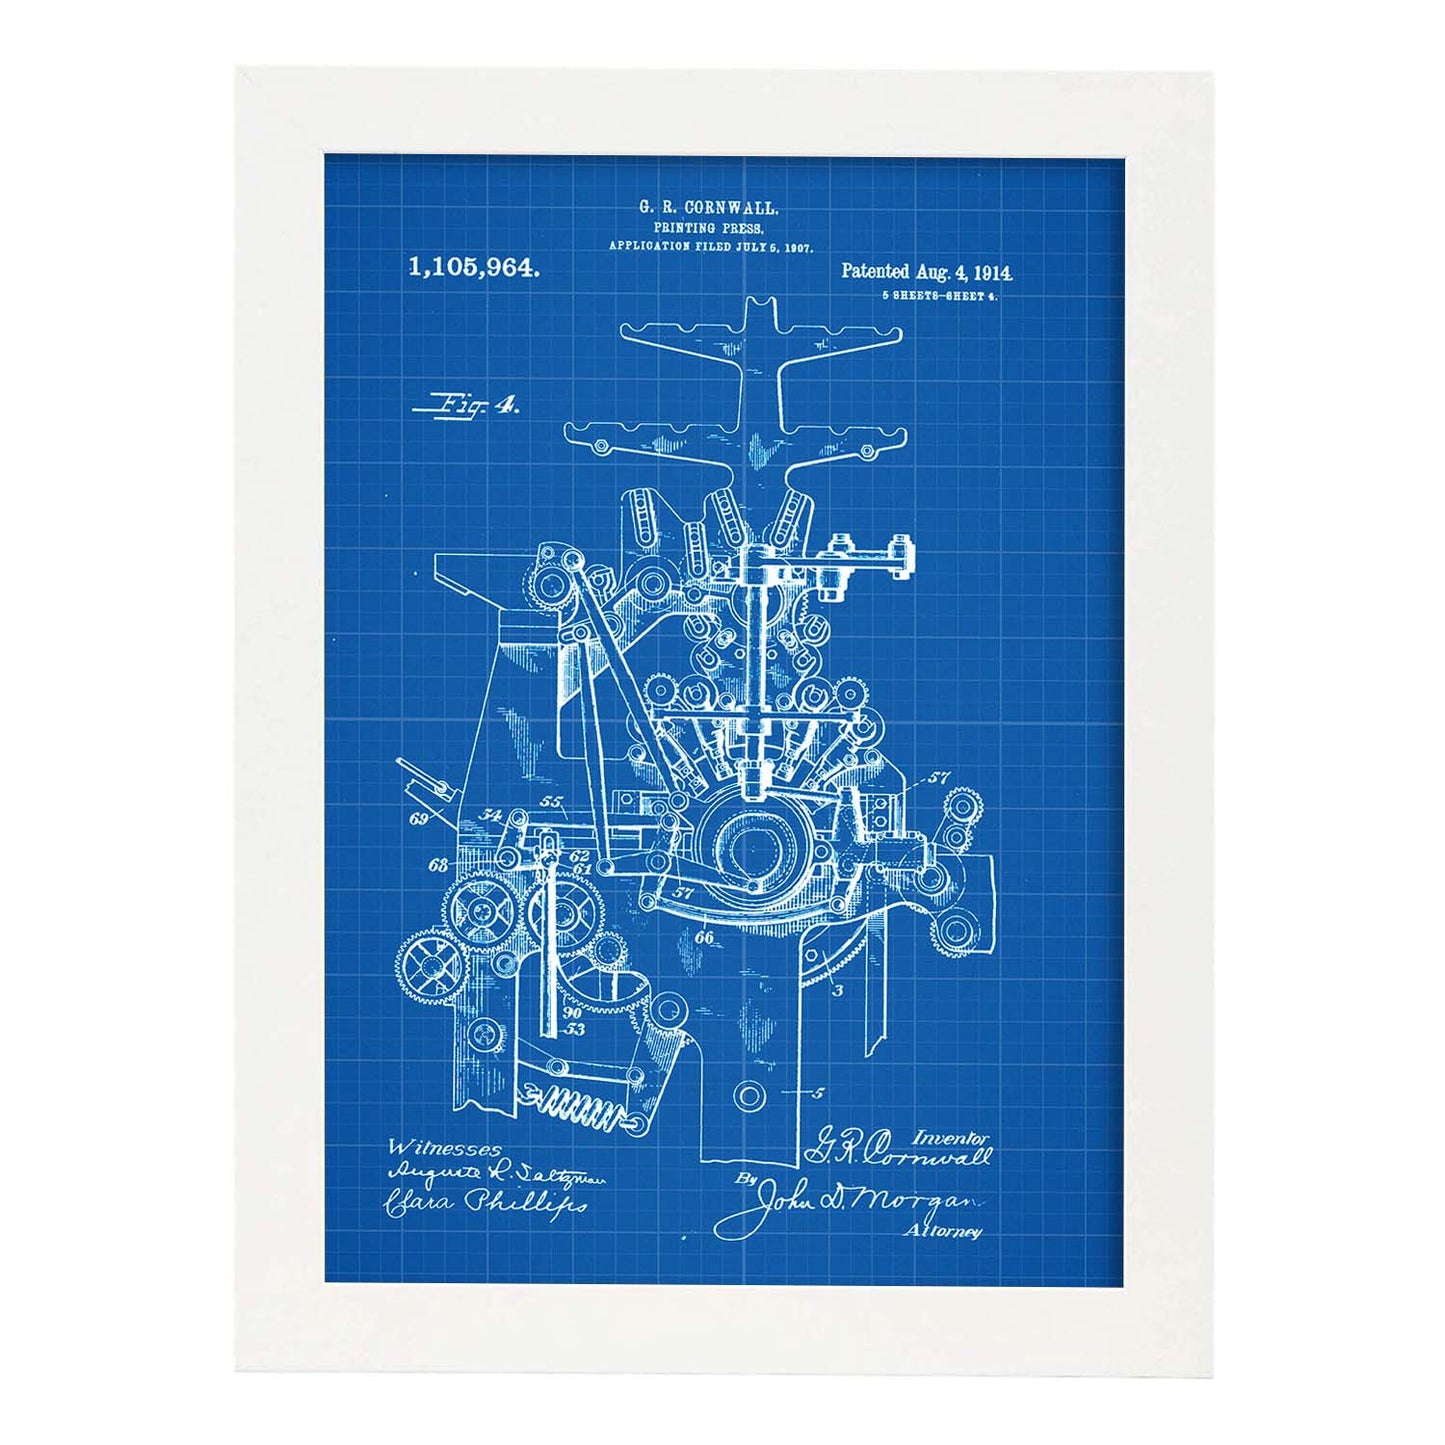 Poster con patente de Prensa de impresion 4. Lámina con diseño de patente antigua-Artwork-Nacnic-A4-Marco Blanco-Nacnic Estudio SL